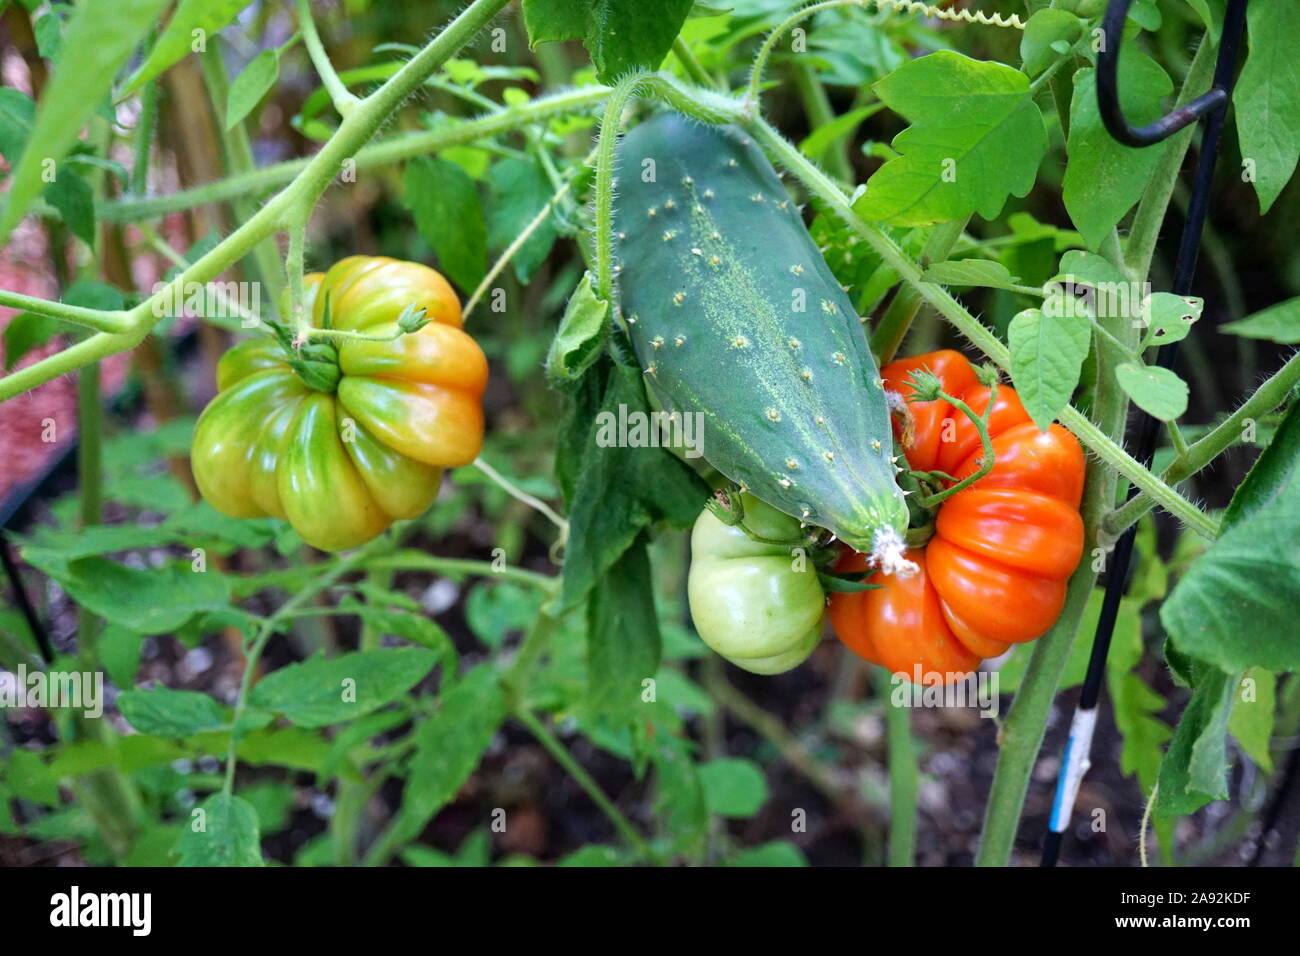 Gardening, growing Costoluto Fiorentino and cucumber on the vine Stock Photo